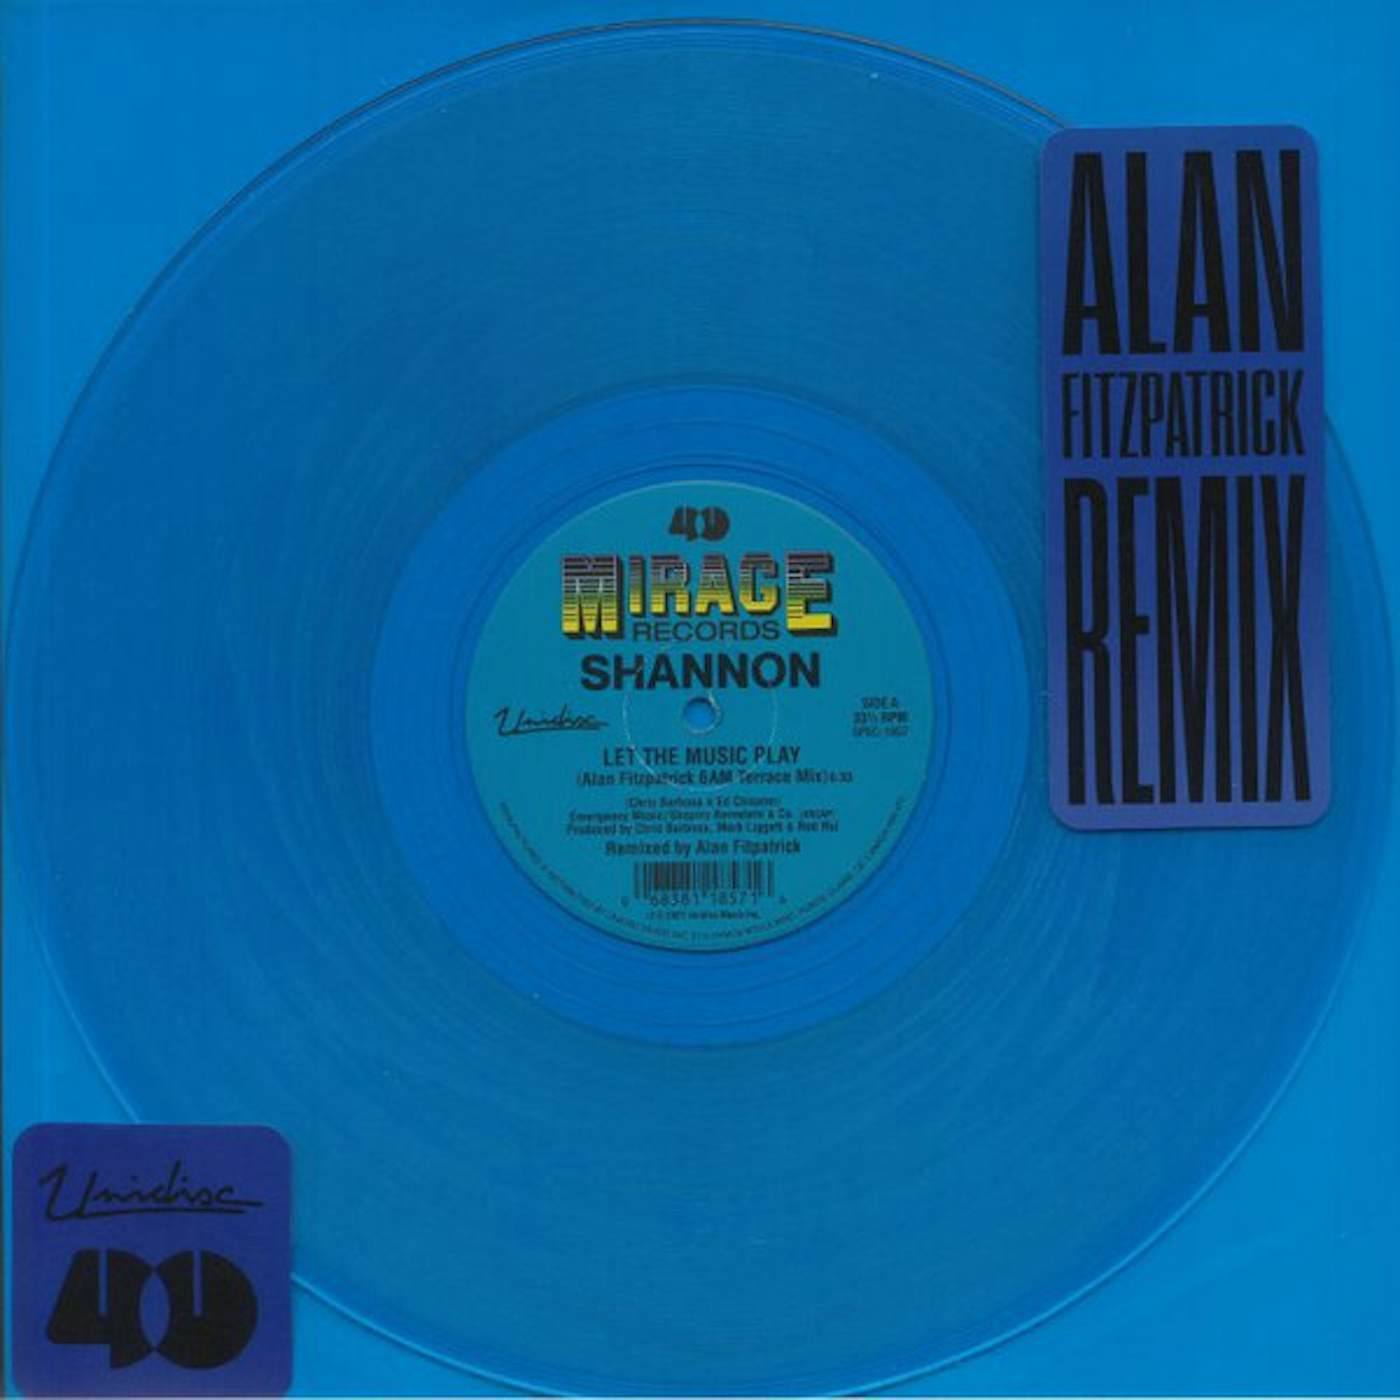 Let the Music Play (Alan Fitzpatrick Remix) Vinyl Record